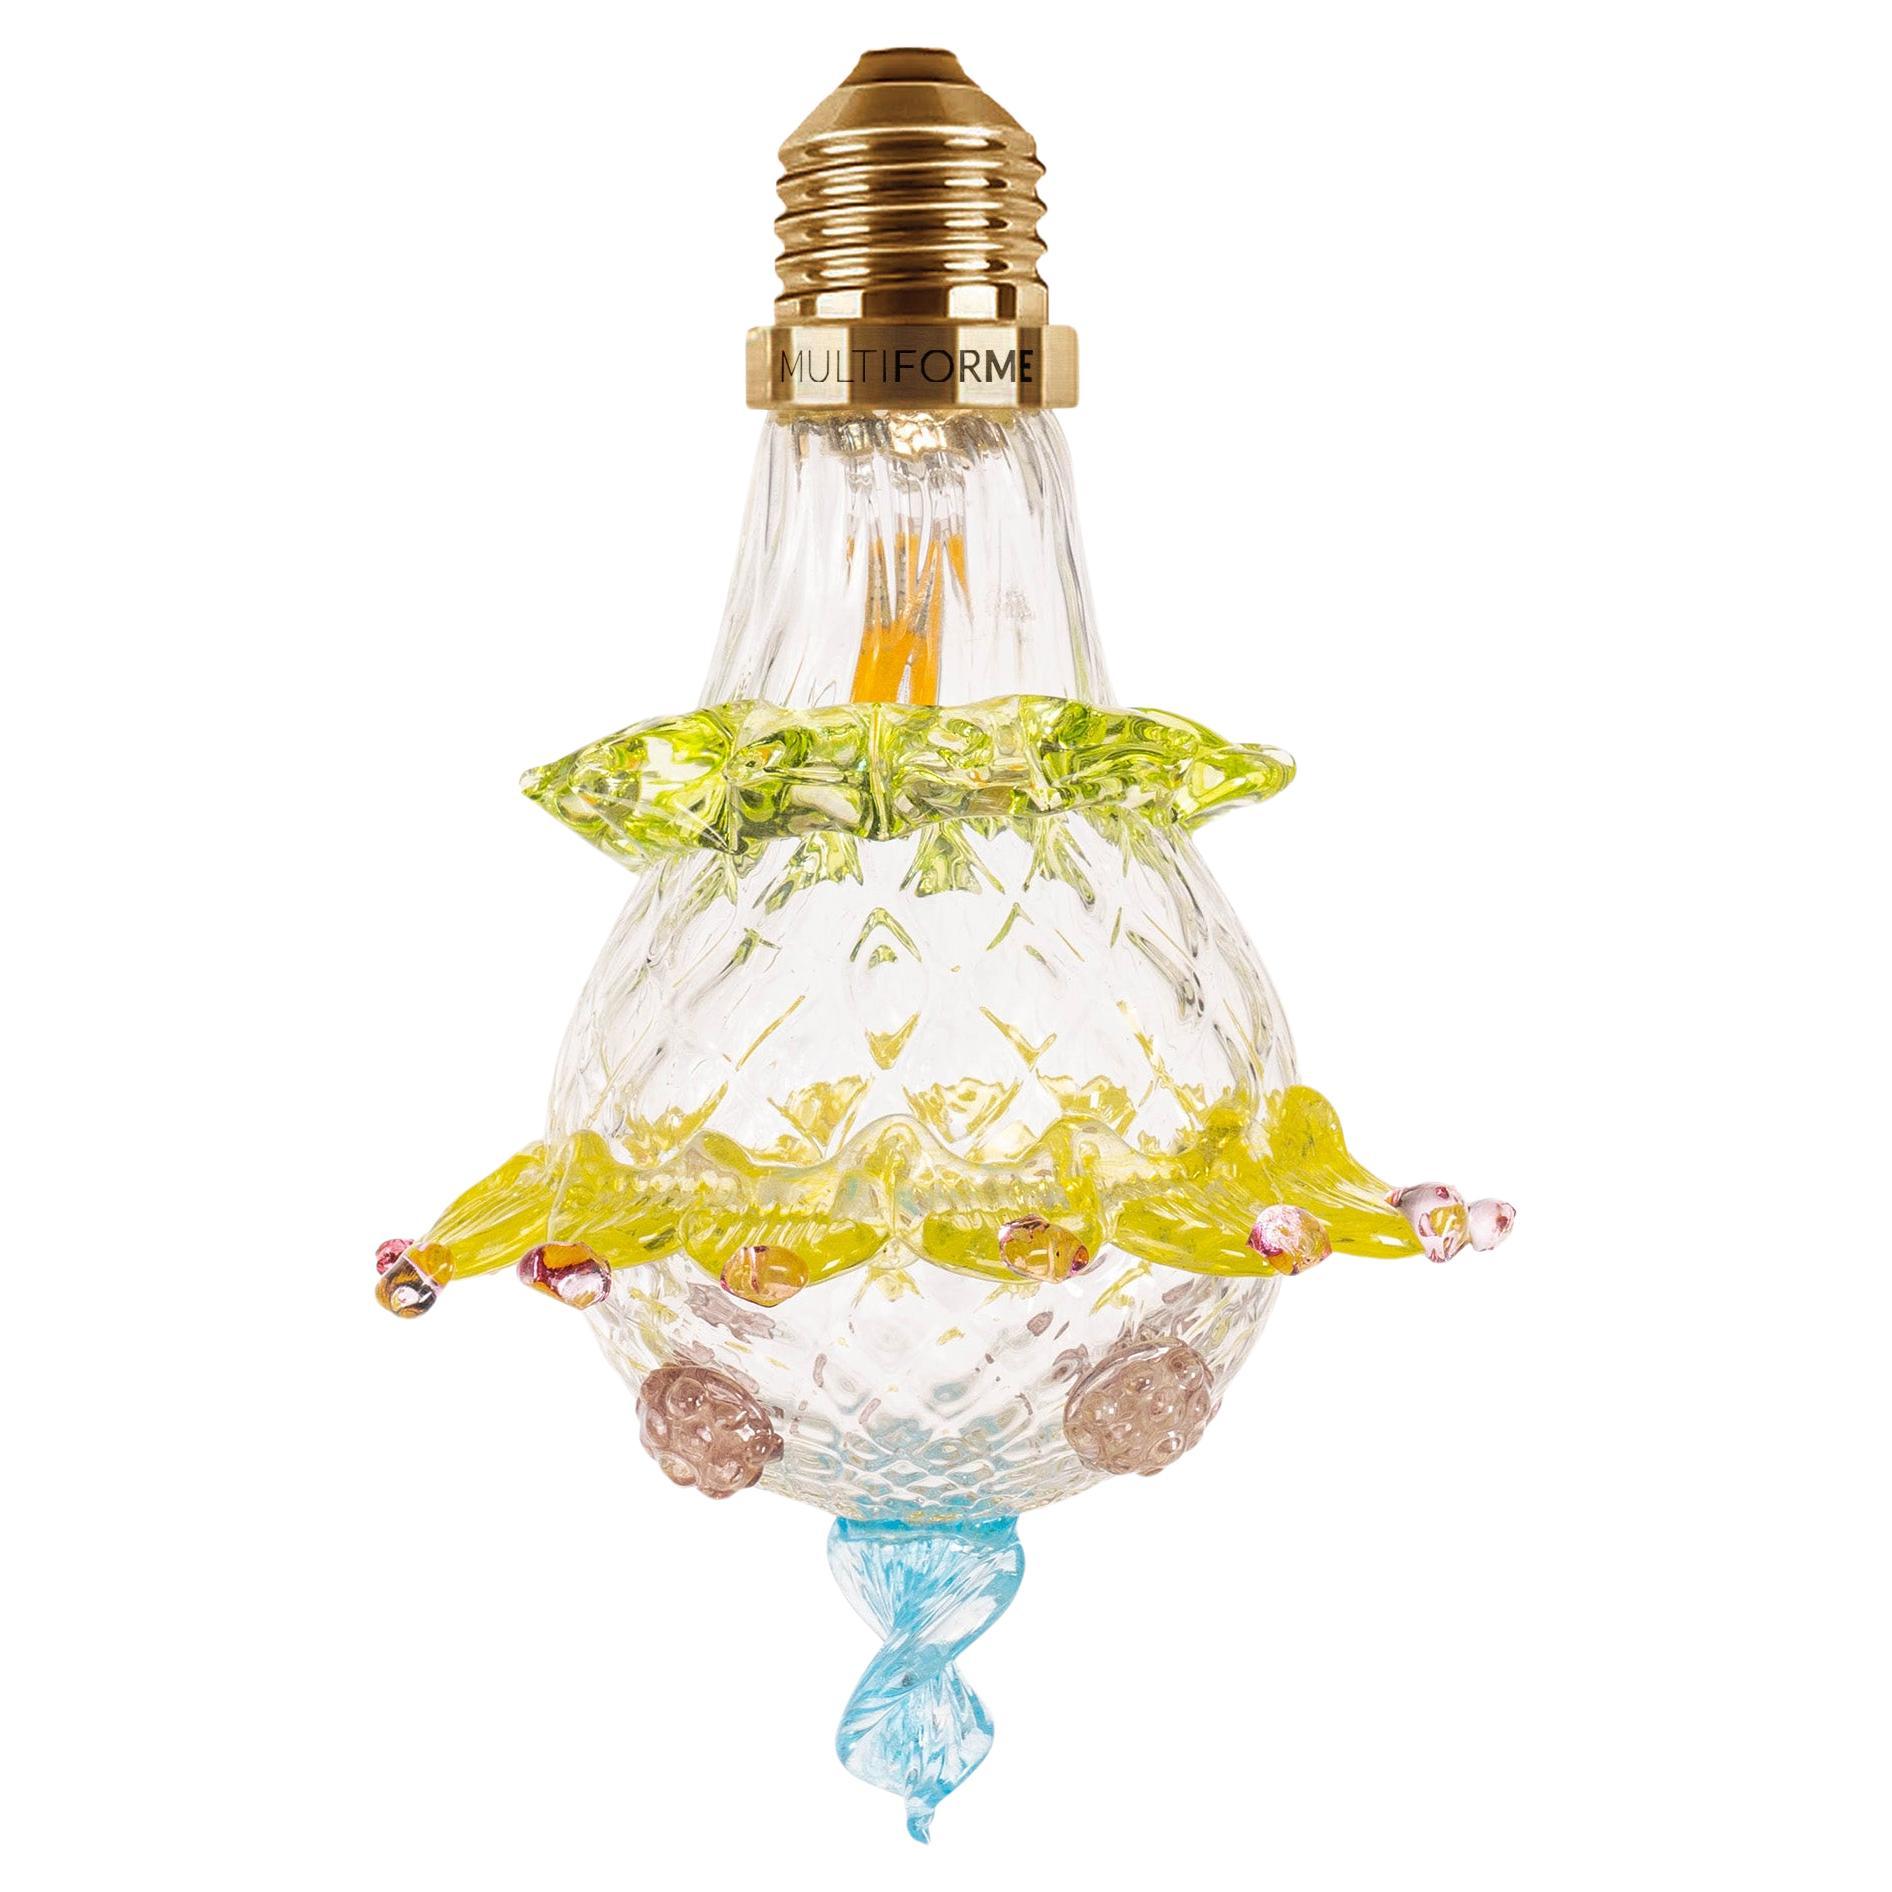 Artistic glass lightbulb chandelier Murano Bulb Marcantonio X Multiforme #06 For Sale